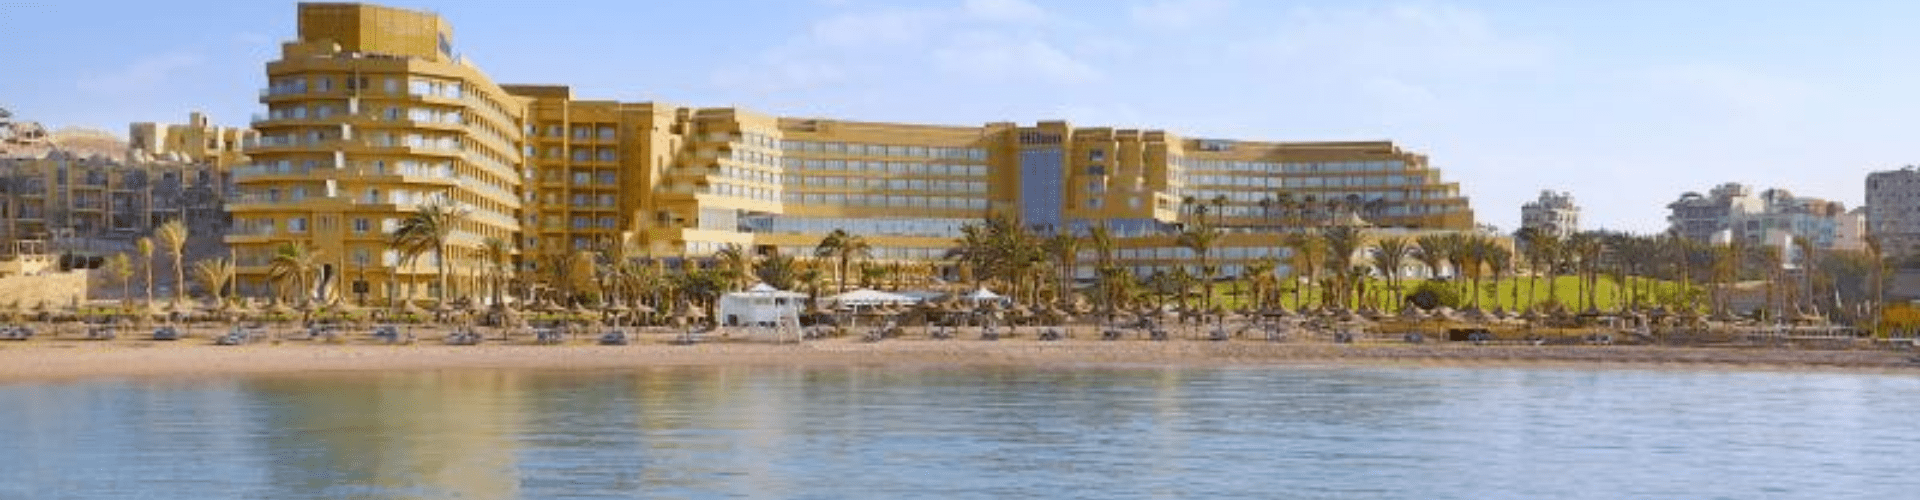 Hotel Hilton Hurghada